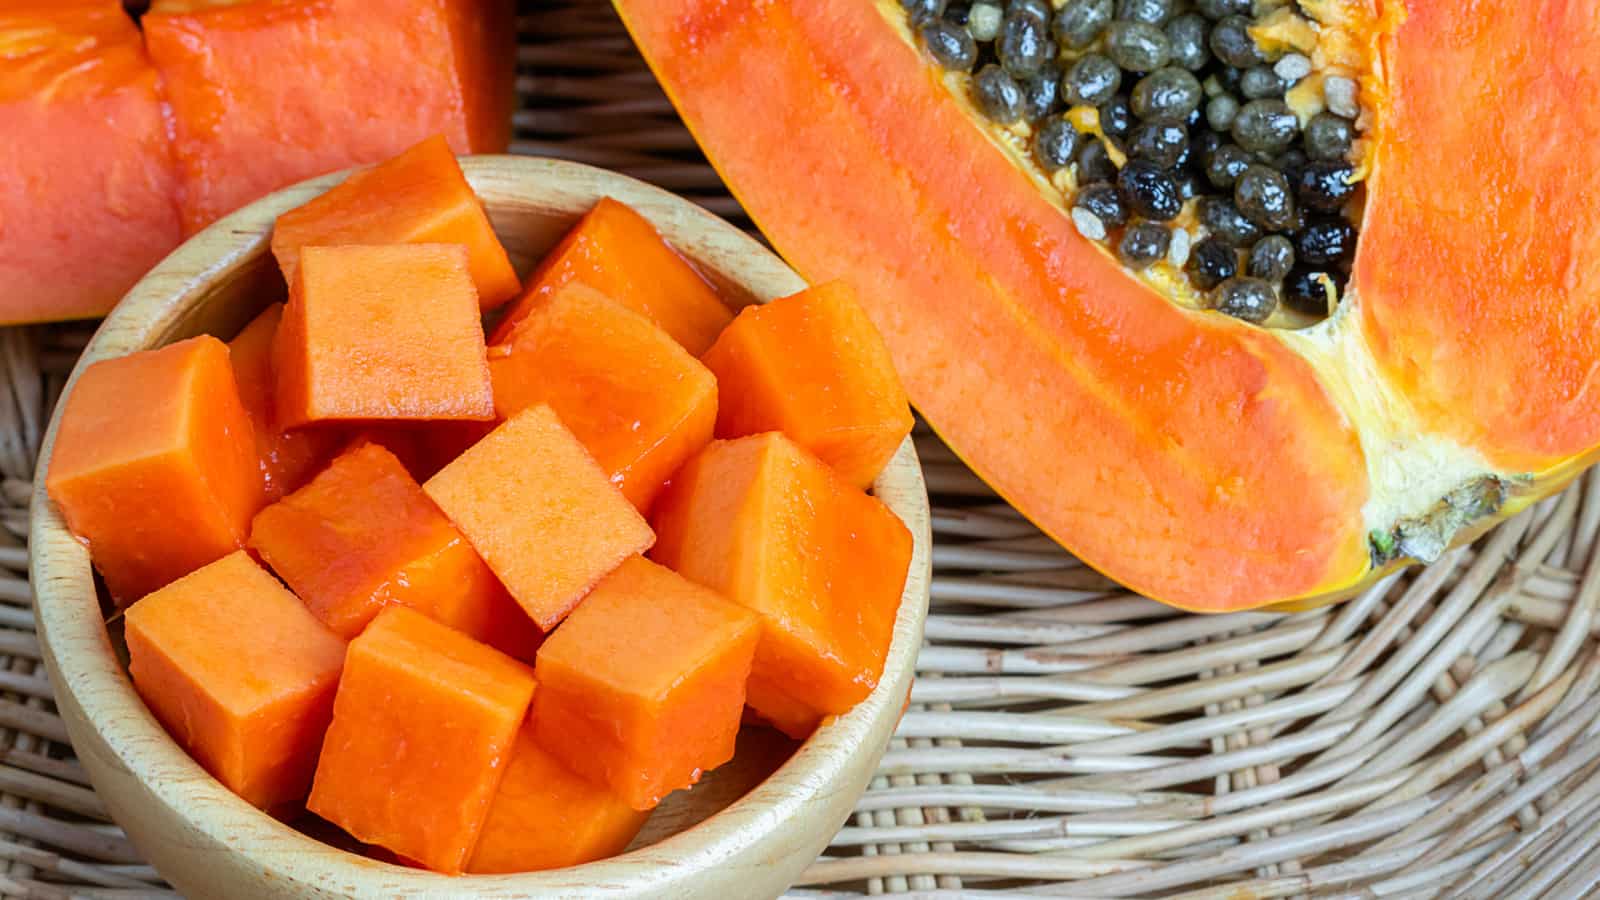 Is Papaya Good For Diabetes?